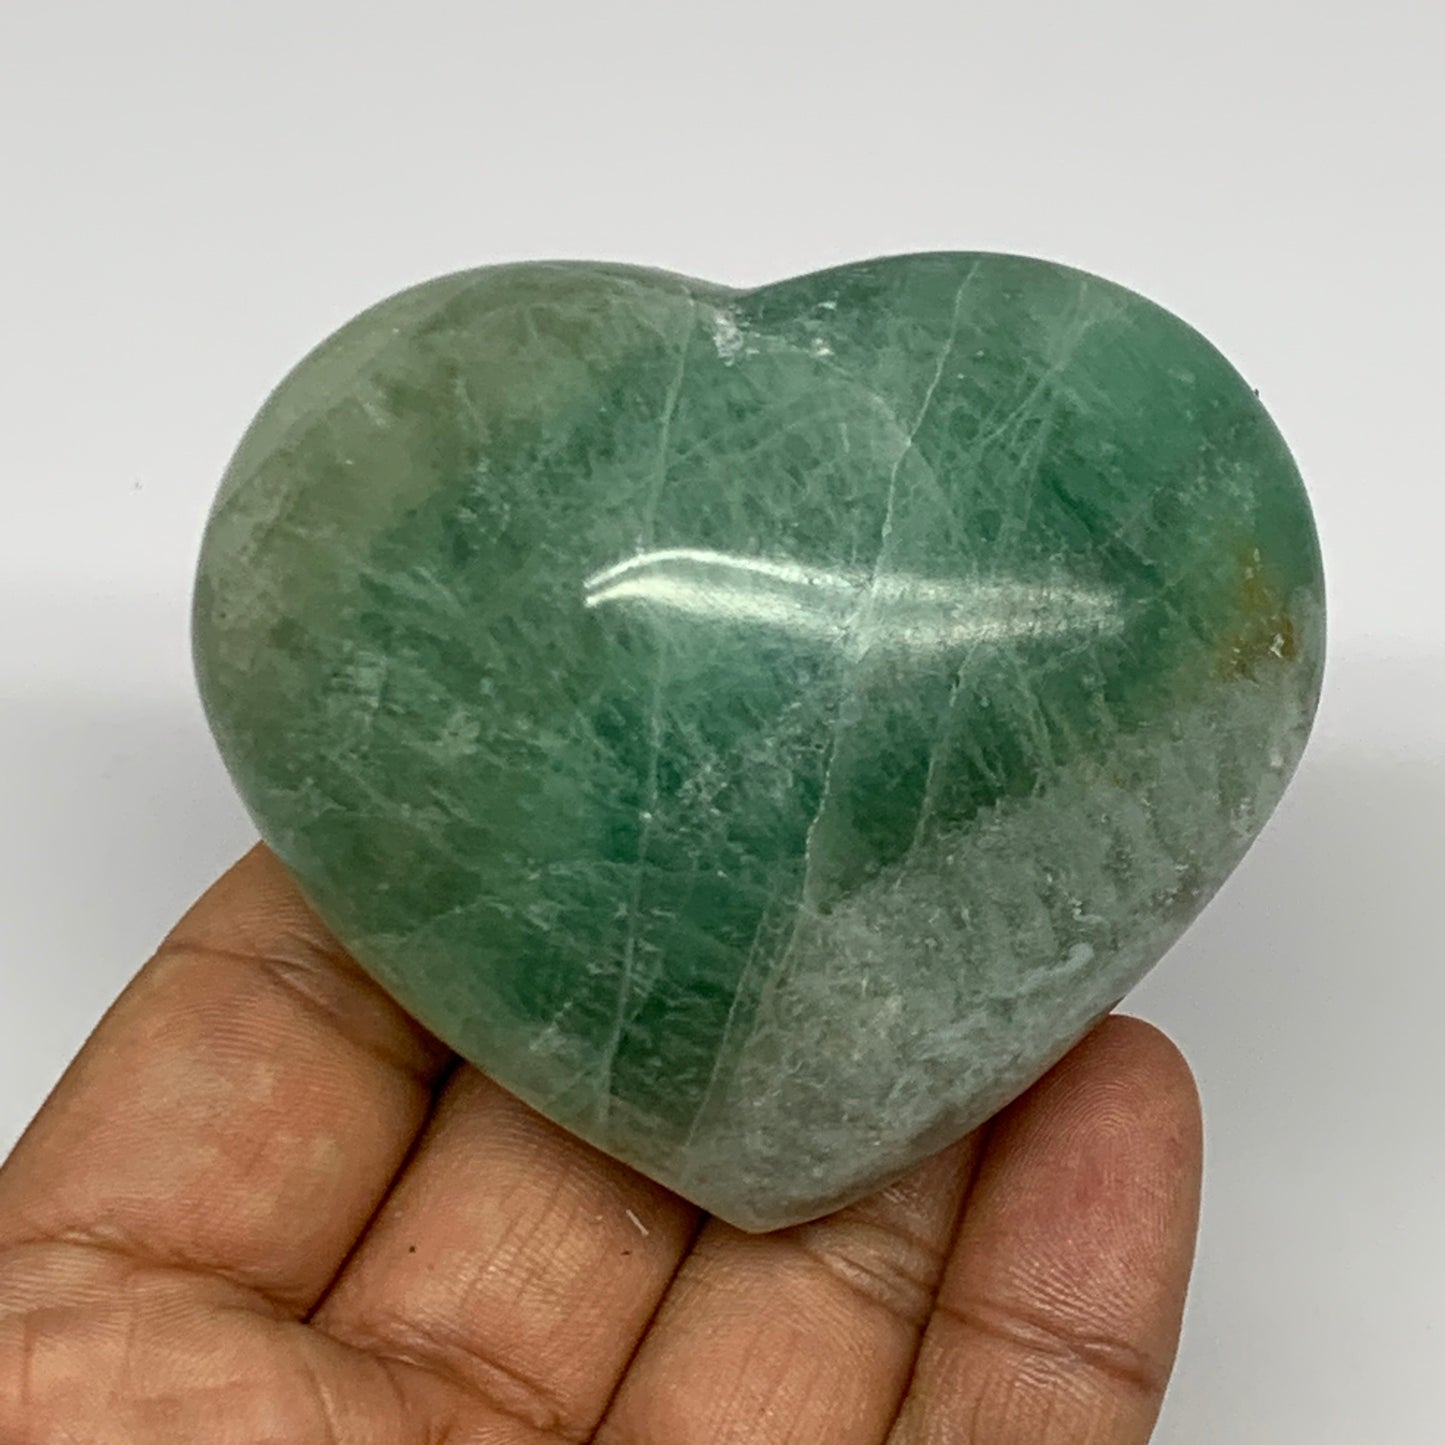 229g, 2.3" x 2.8" x 1.4" Fluorite Heart Healing Crystal @Madagascar, B17323